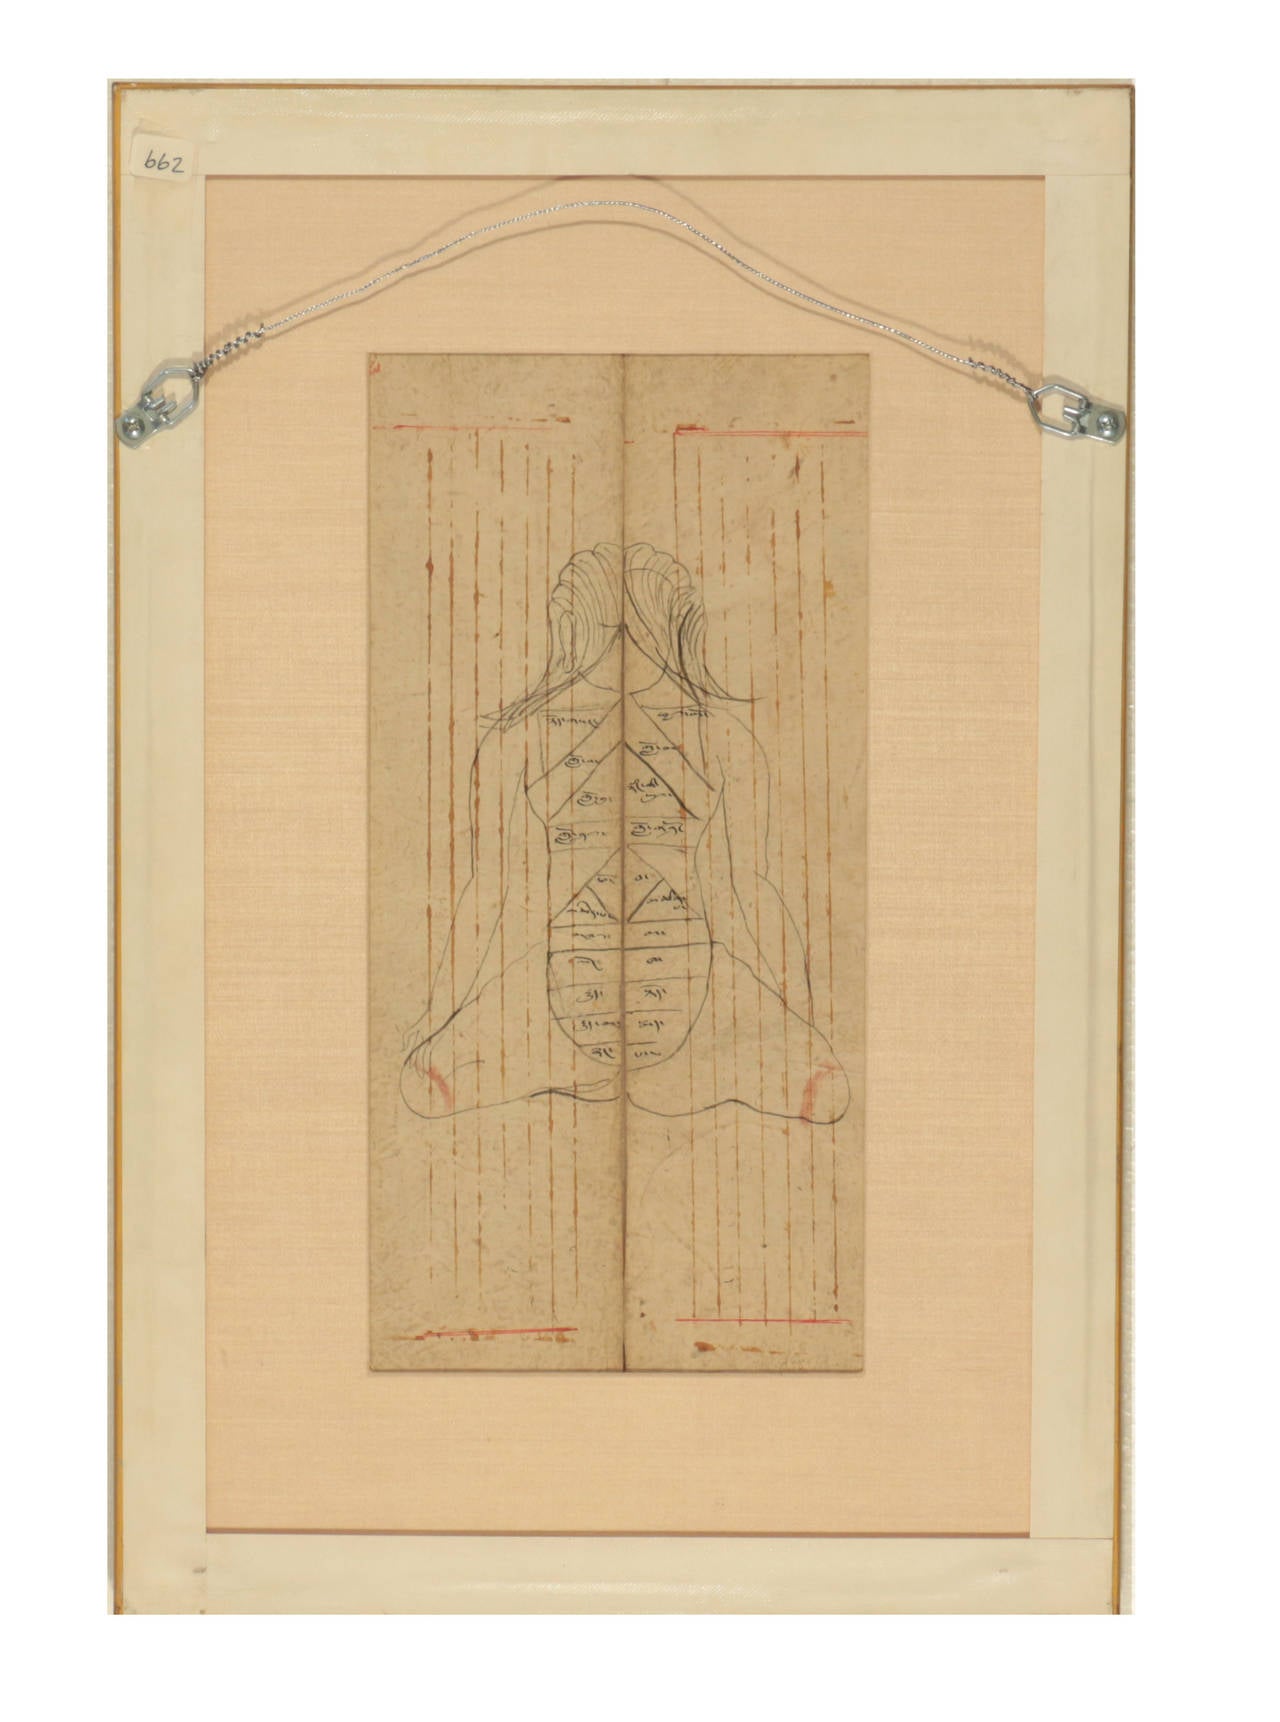 Rare illuminated Tibetan Medical Manuscript Leaves. Early 19th century. Gilt frame, glazed on both sides.